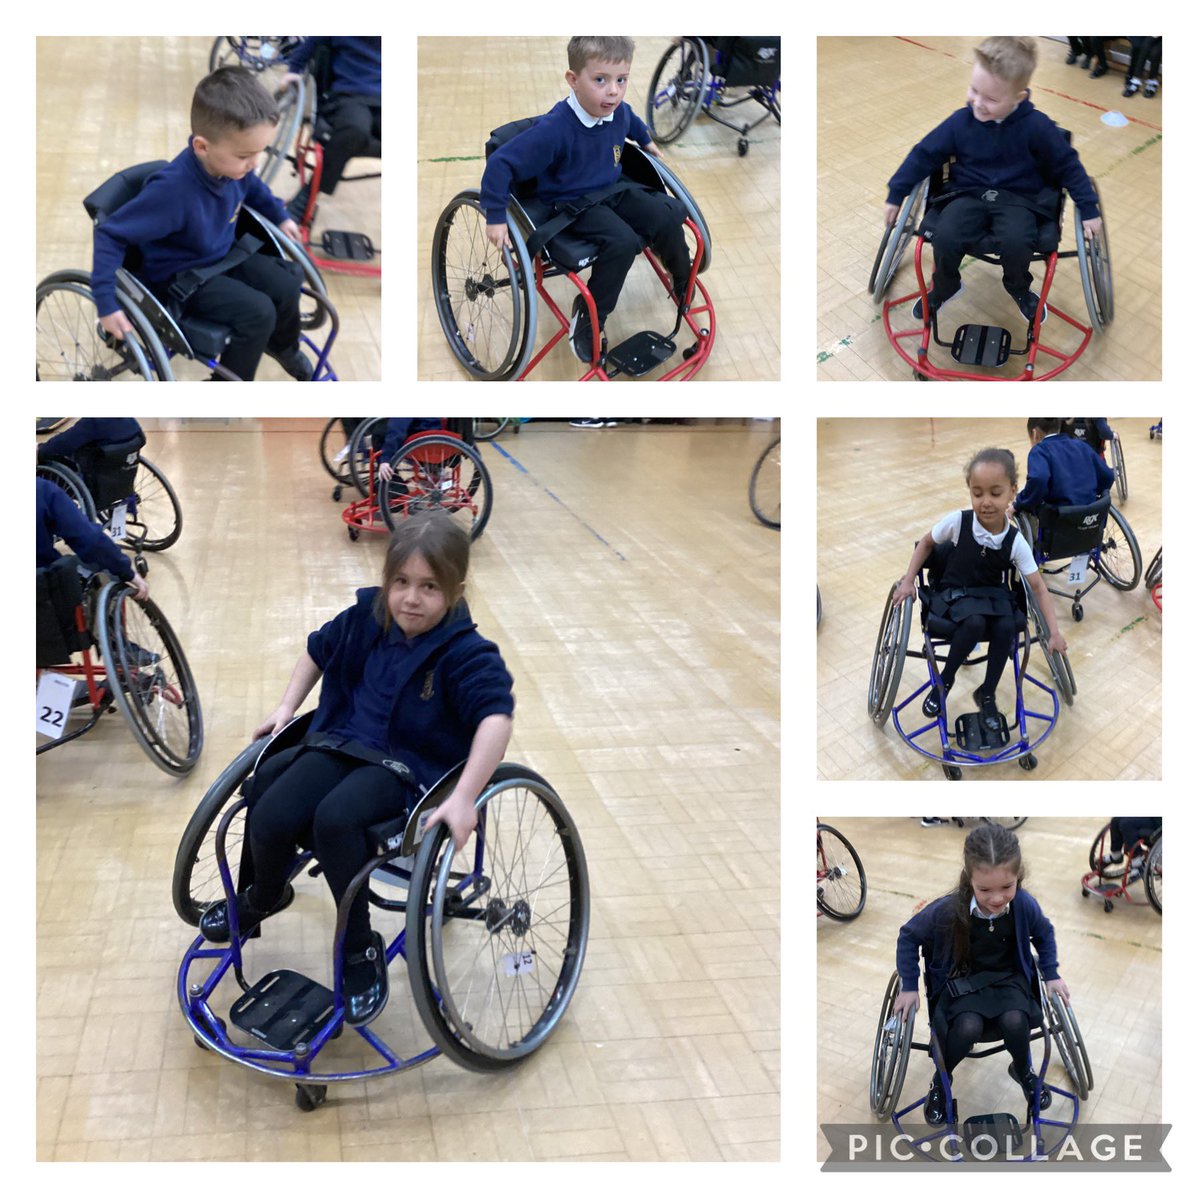 Y1WO enjoyed their wheelchair sports session yesterday